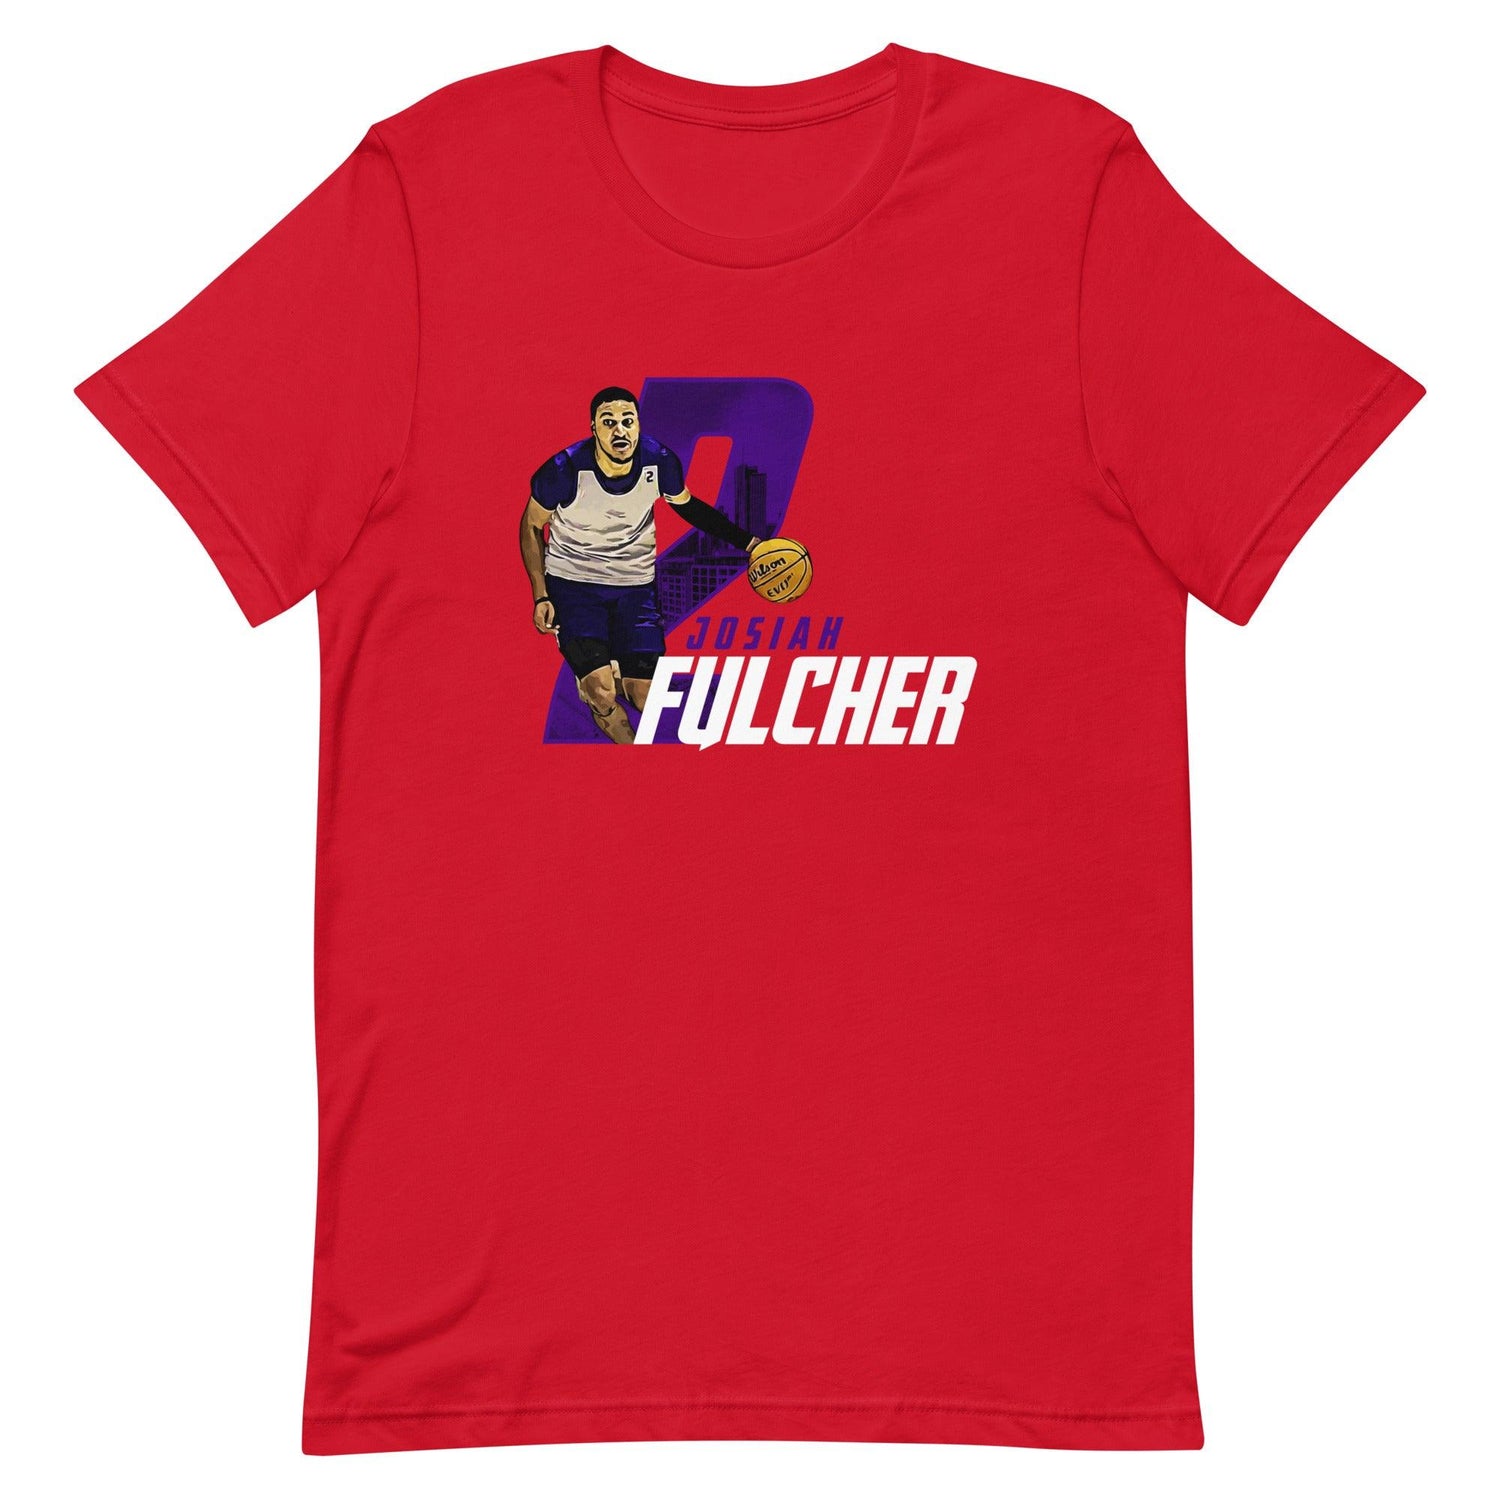 Josiah Fulcher "Gameday" t-shirt - Fan Arch